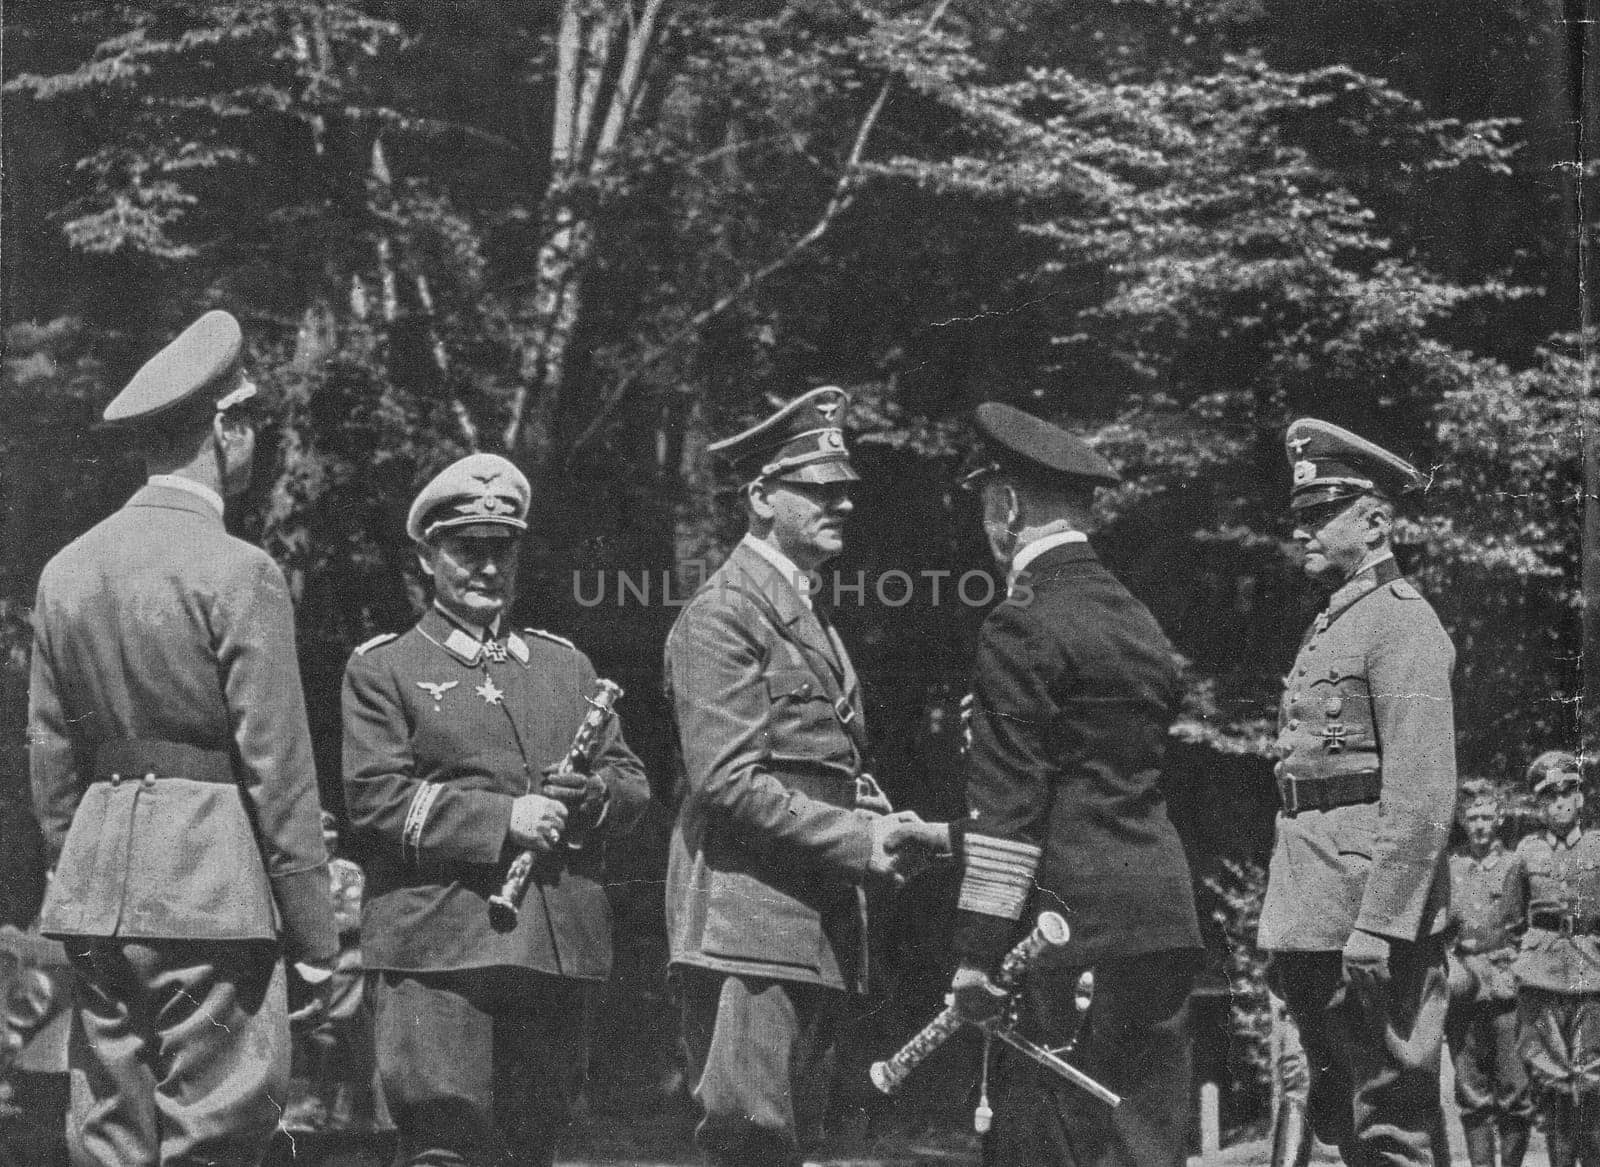 COMPIEGNE, FRANCE - JUN 21, 1940: The meeting of fascist leaders before armistice with Francein Compiegne. From left to right: Deputy Fuhrer Rudlof Hess, Reichsmarschall Hermann Goring, Adolf Hitler, Admiral Erich Raeder and Field Marshal Walter von Brauchitsch.